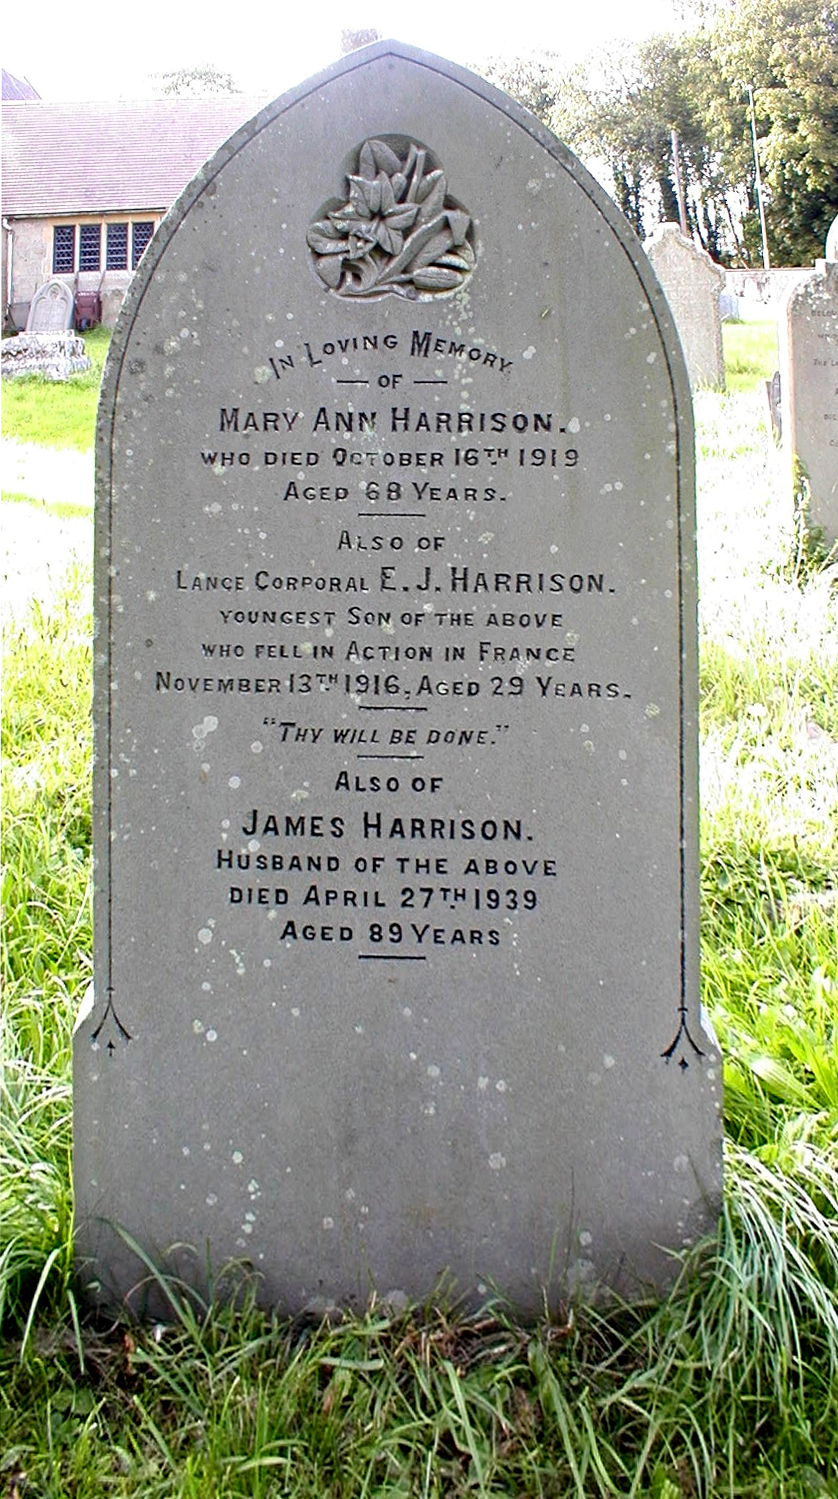 Edward James HARRISON